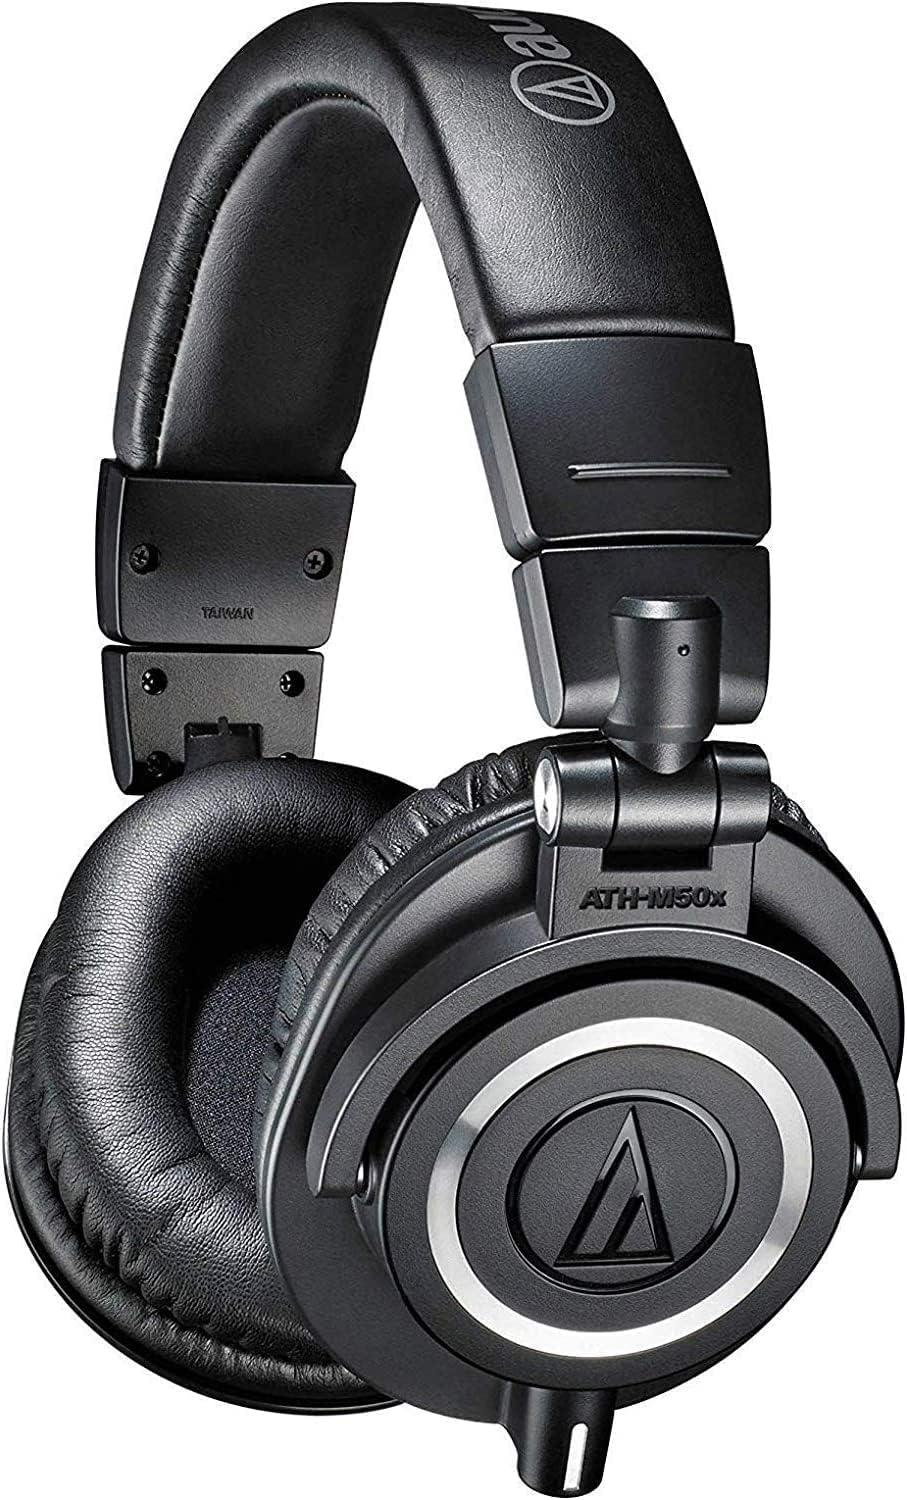 audio-technica ath-m50x professional studio monitor headphones black professional grade critically acclaimed